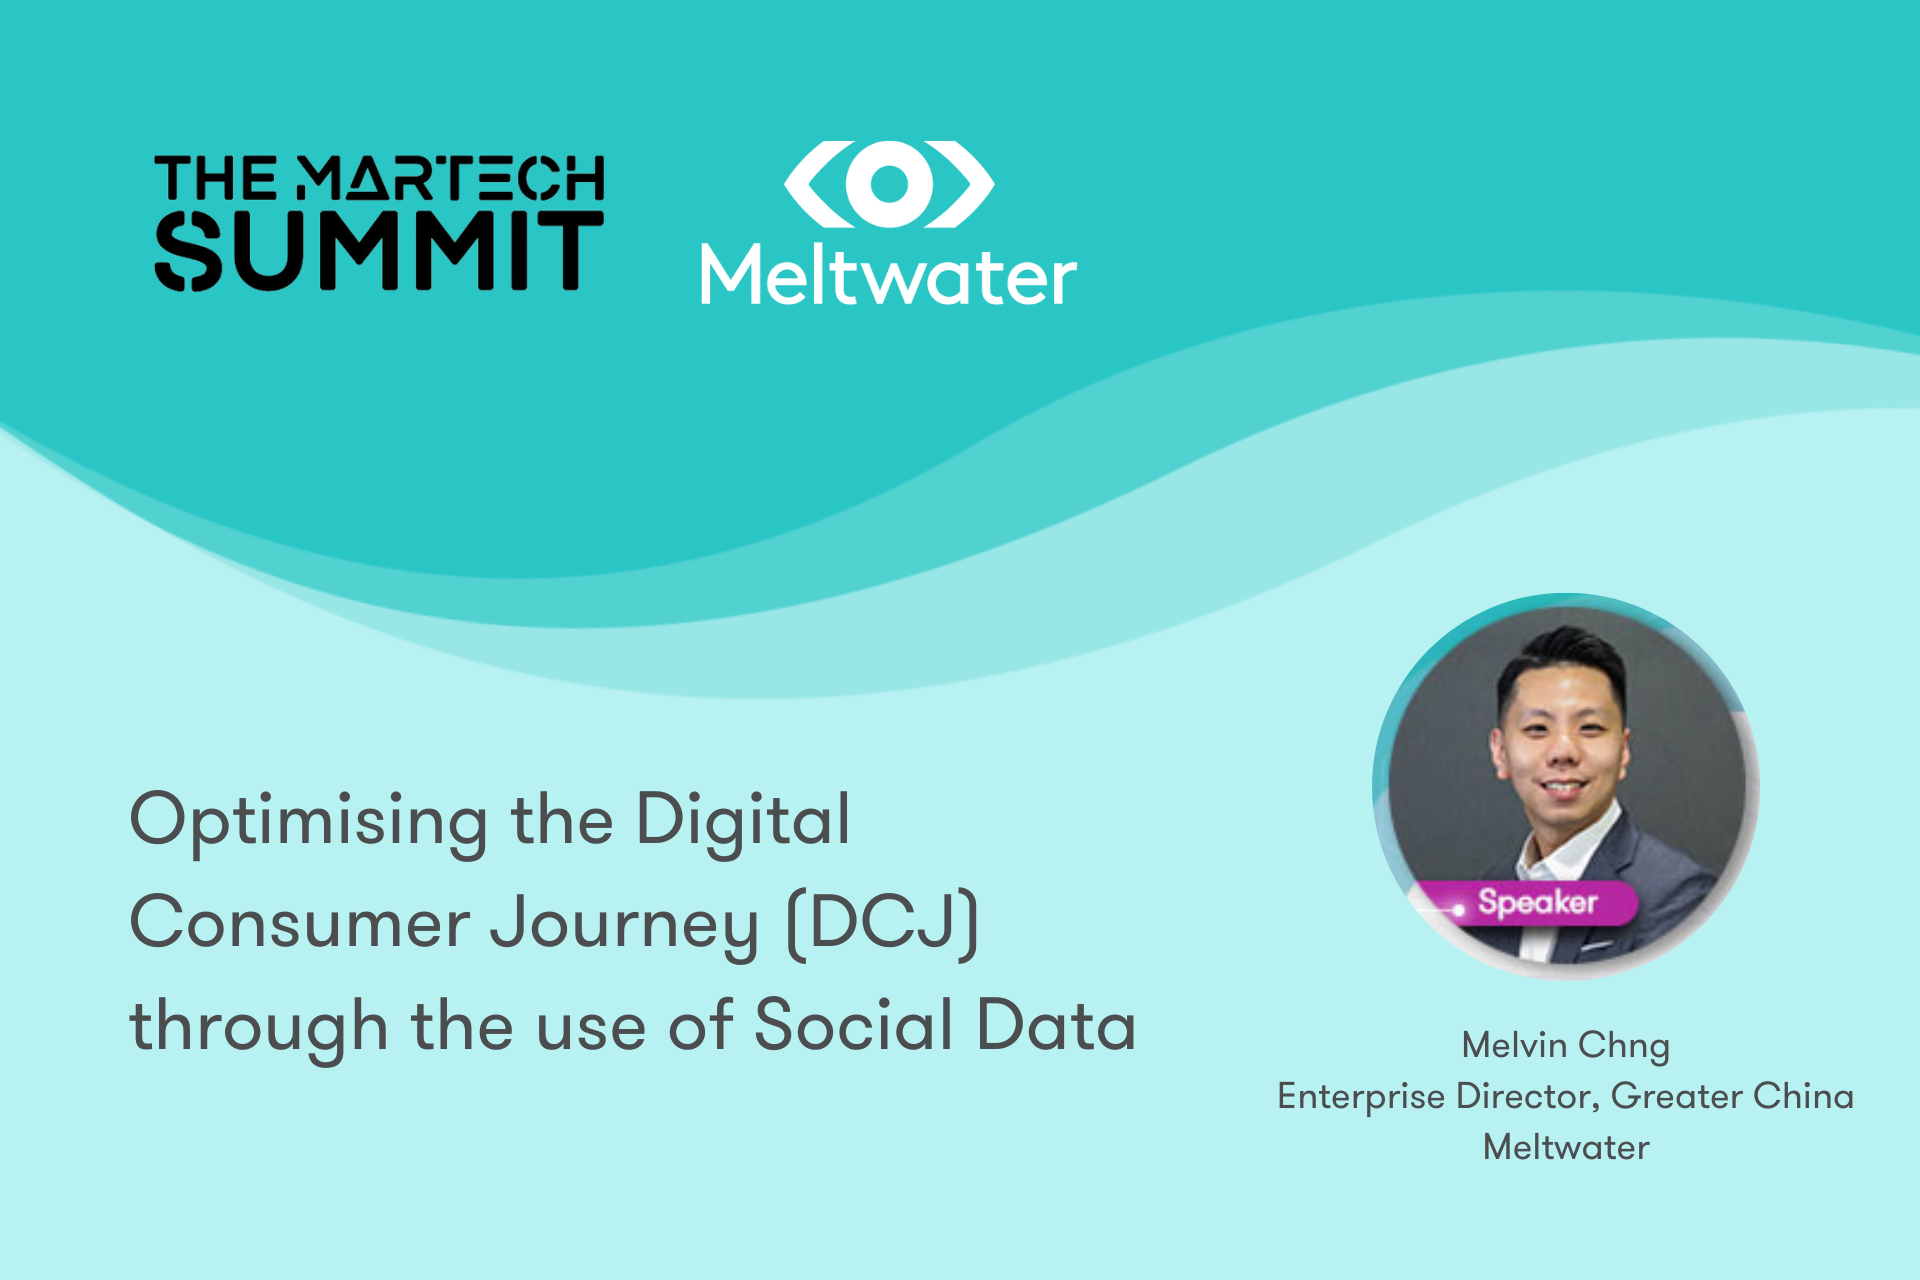 Optimising the Digital Consumer Journey through Social data